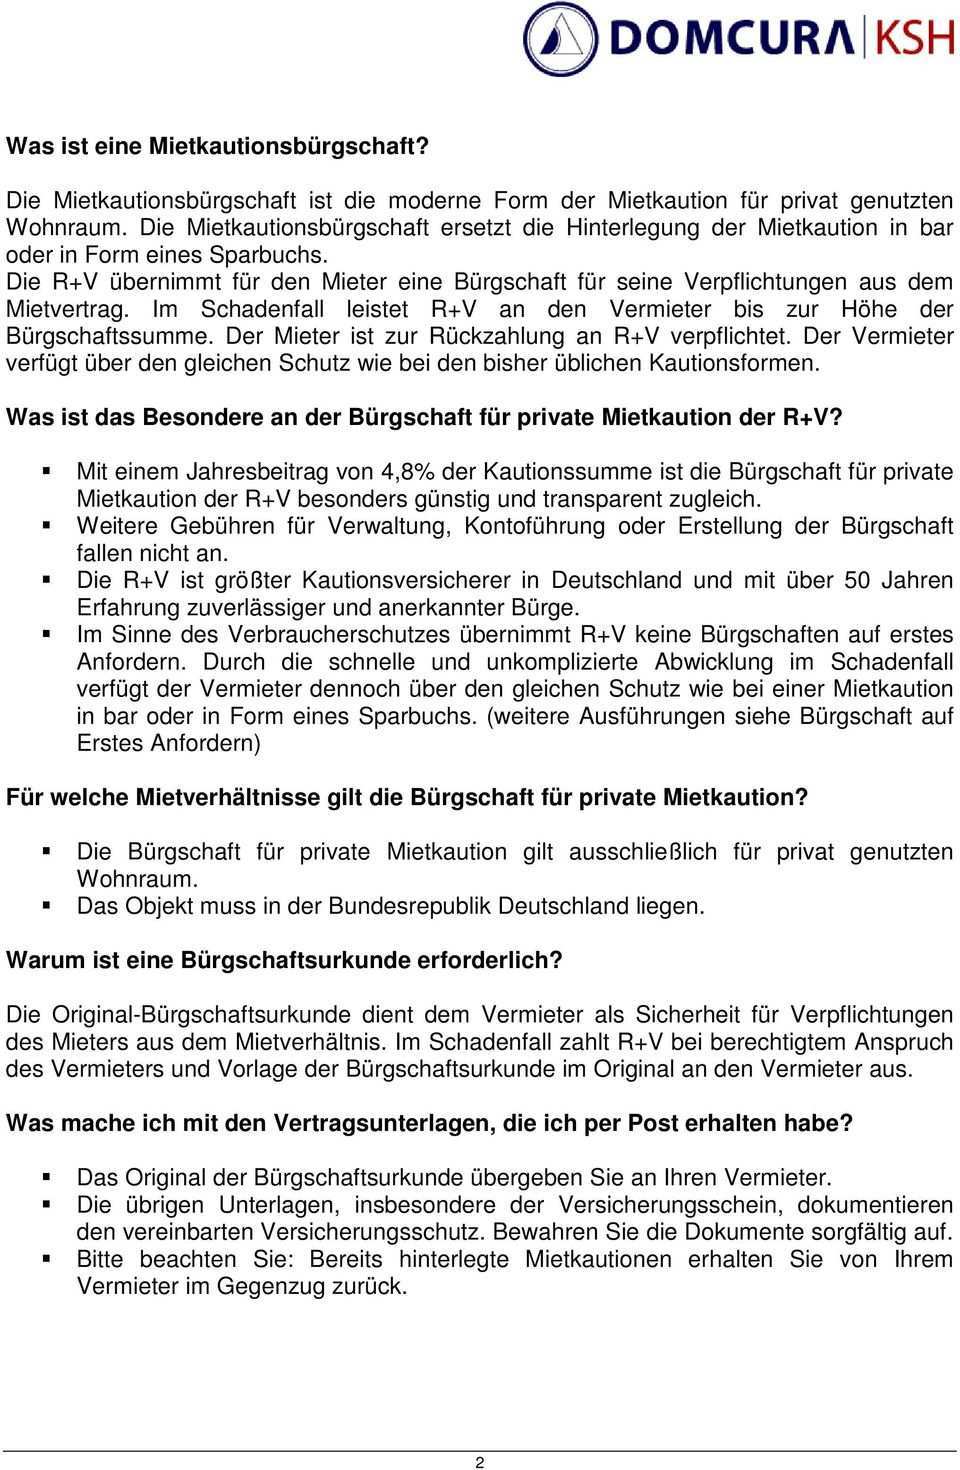 Faqs Burgschaft Fur Private Mietkaution Pdf Free Download